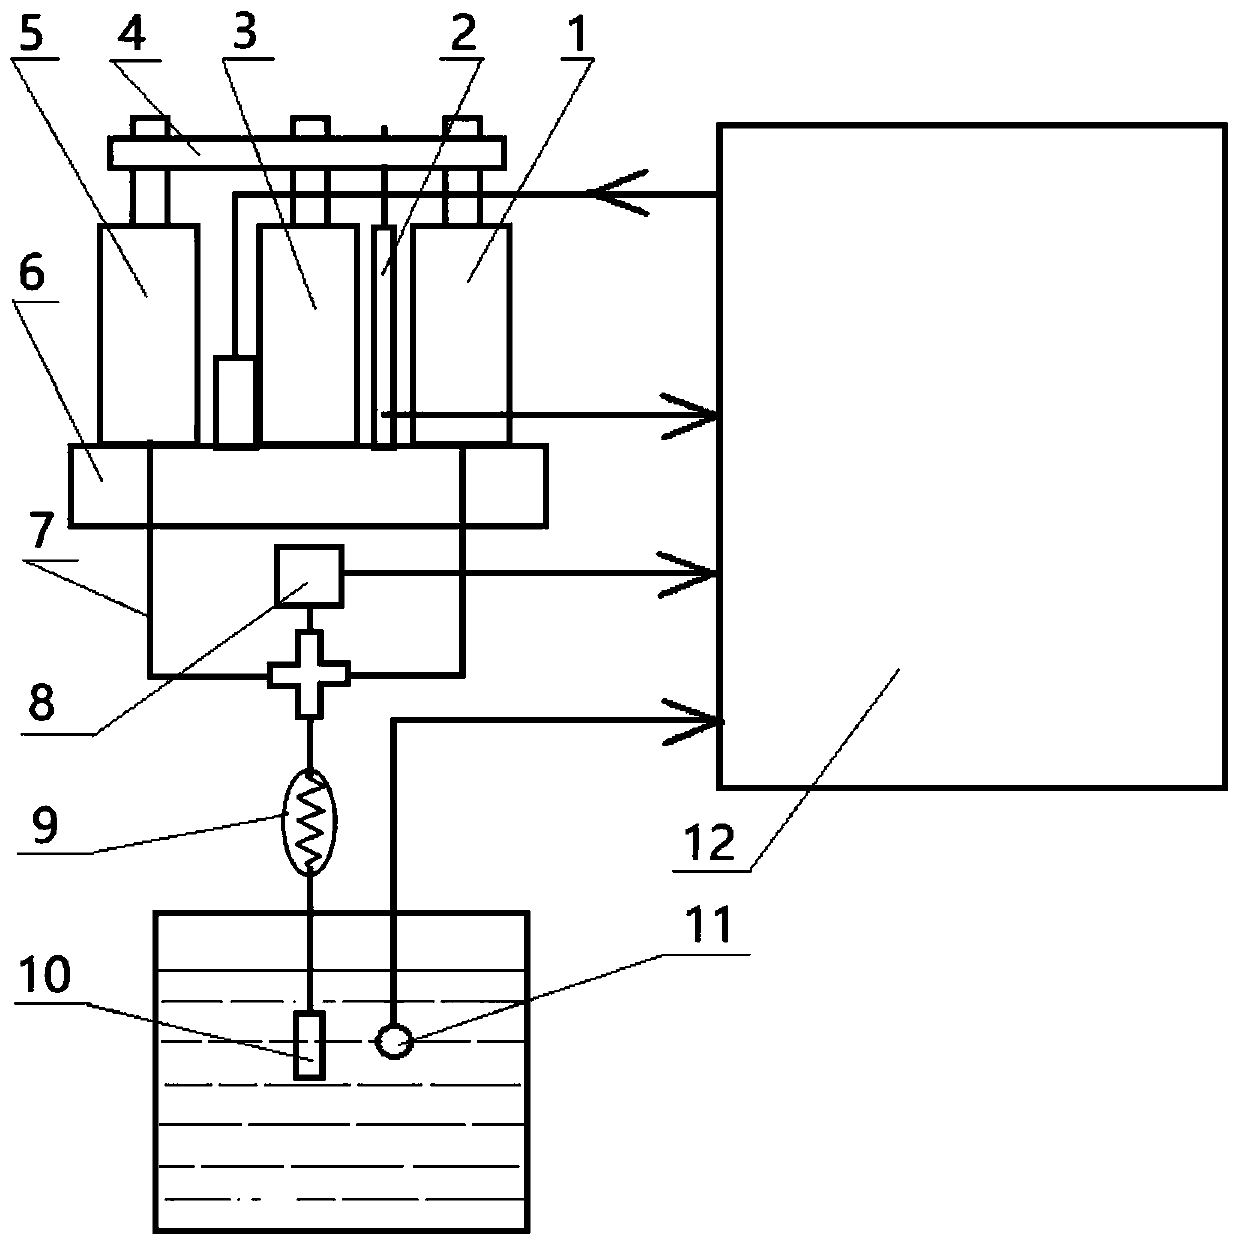 Hydrogen partial pressure rapid detection method for aluminum alloy melt dynamic respiration method hydrogen measurement device